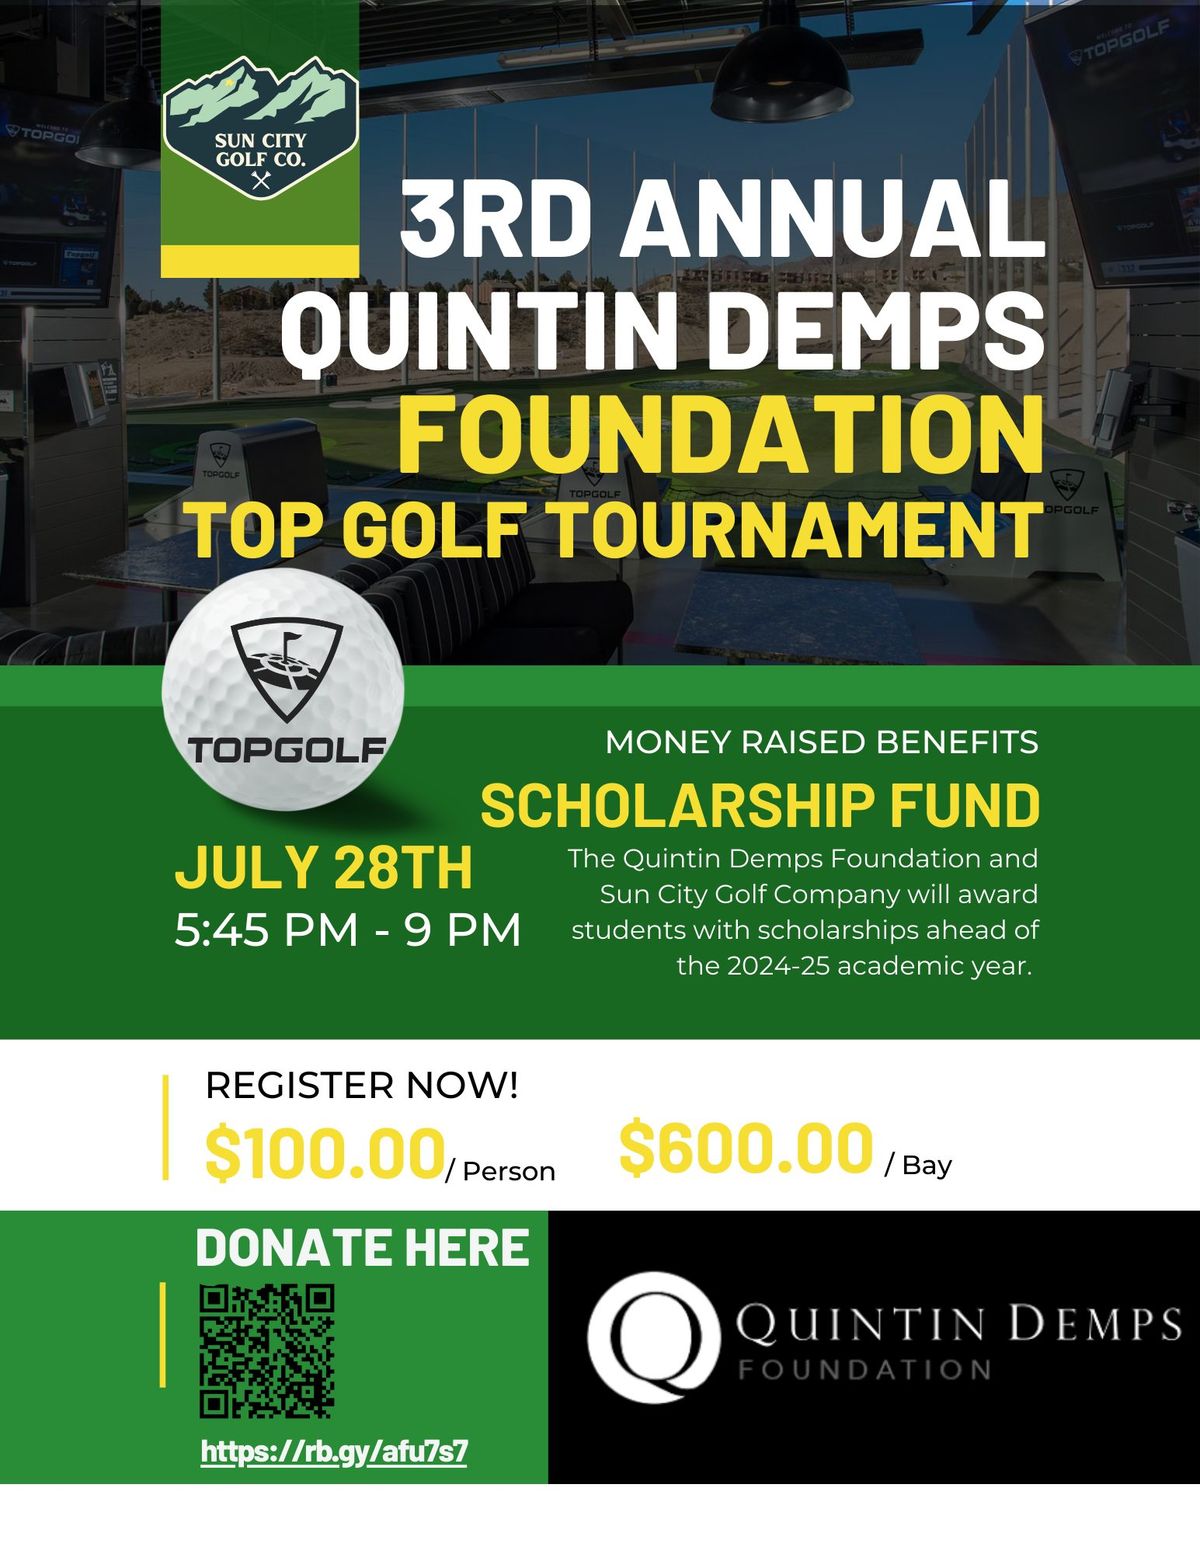 3rd Annual Quintin Demps Foundation Top Golf Tournament